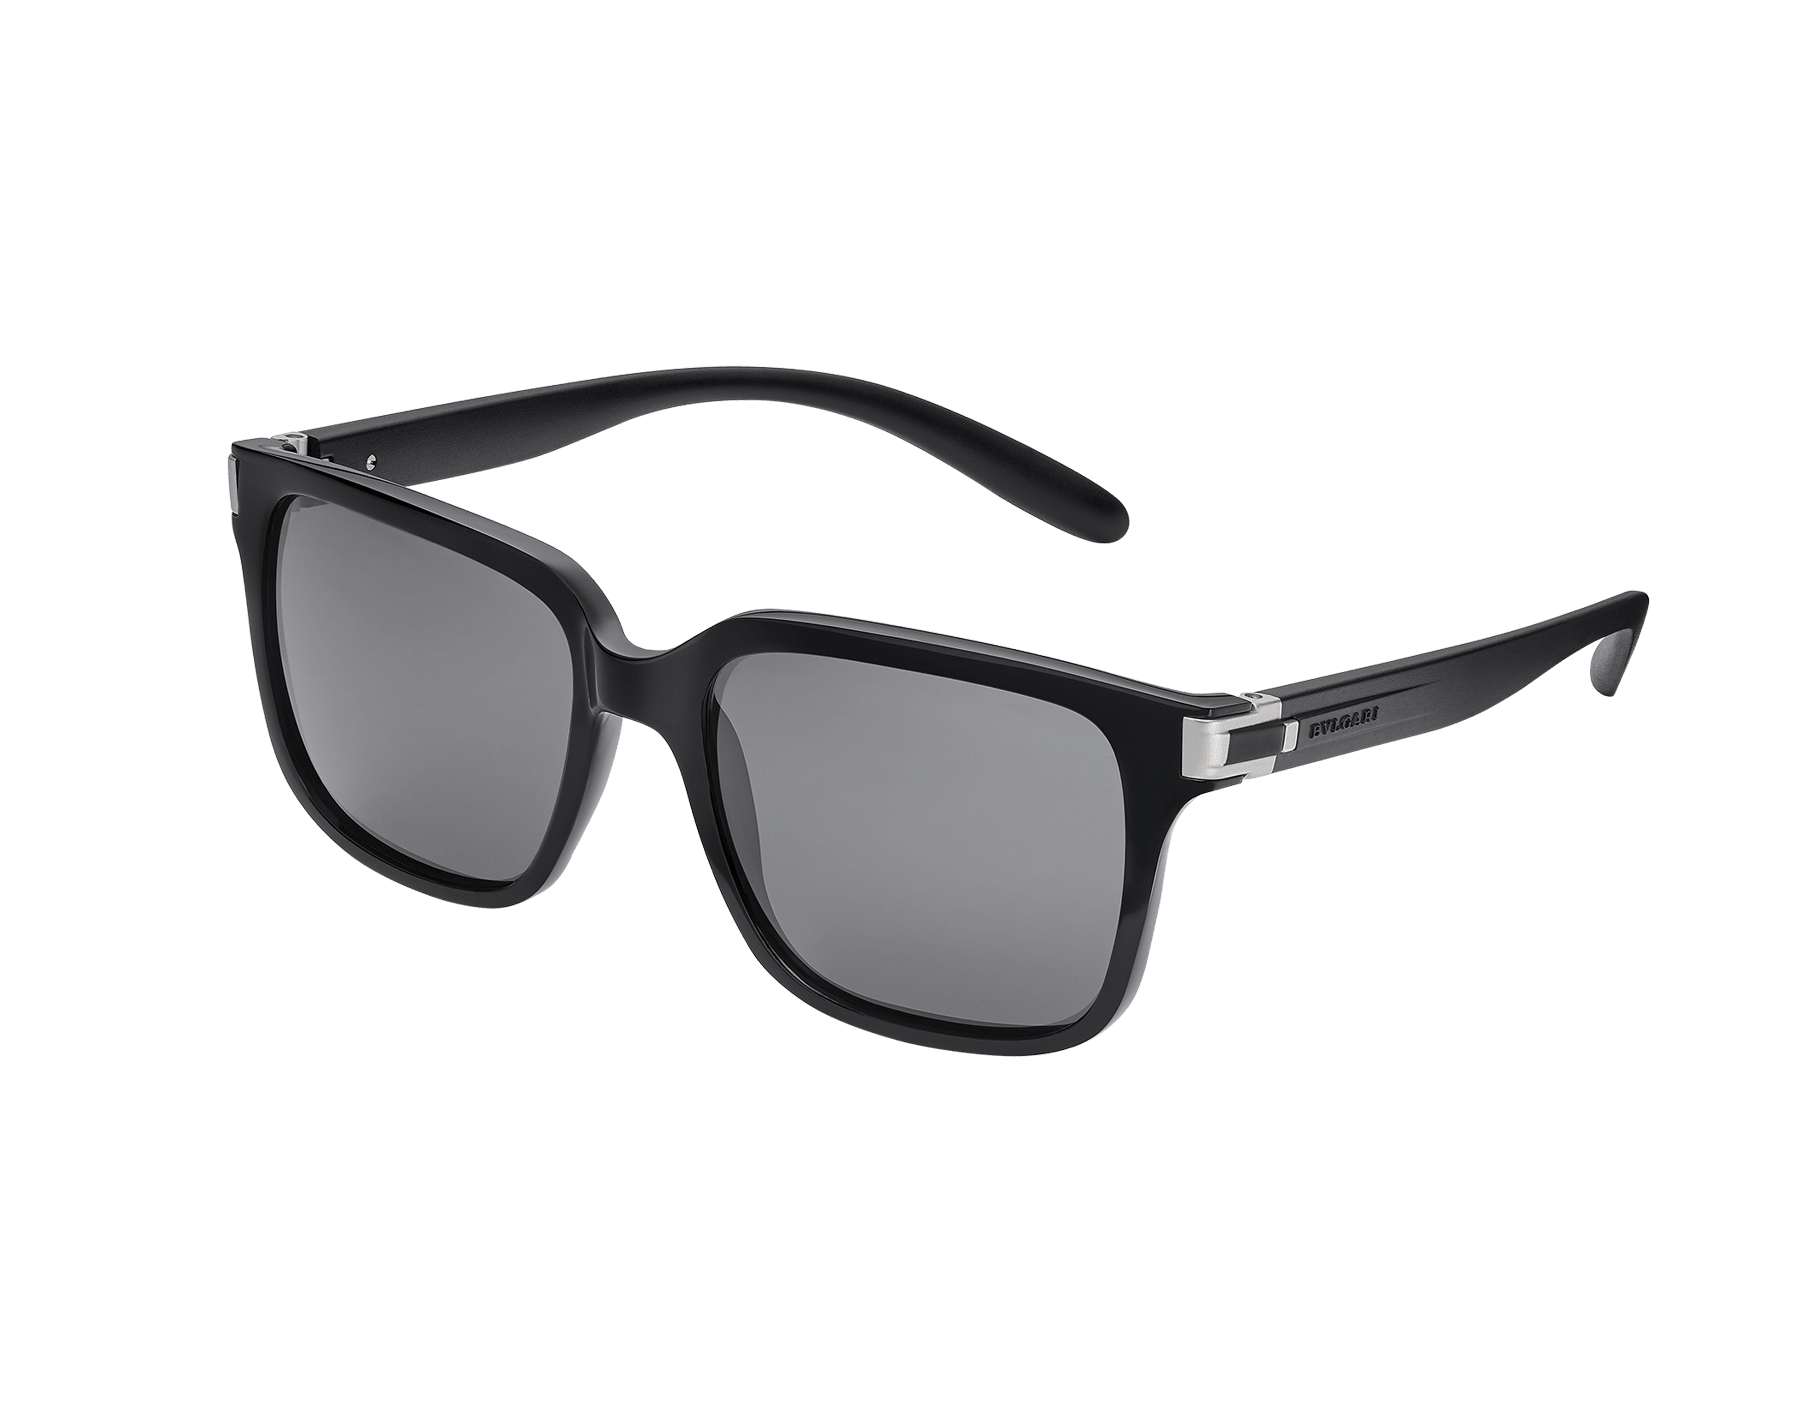 Order Online Bvlgari - 0BV5053 128 31 size - 56 Sunglasses Now